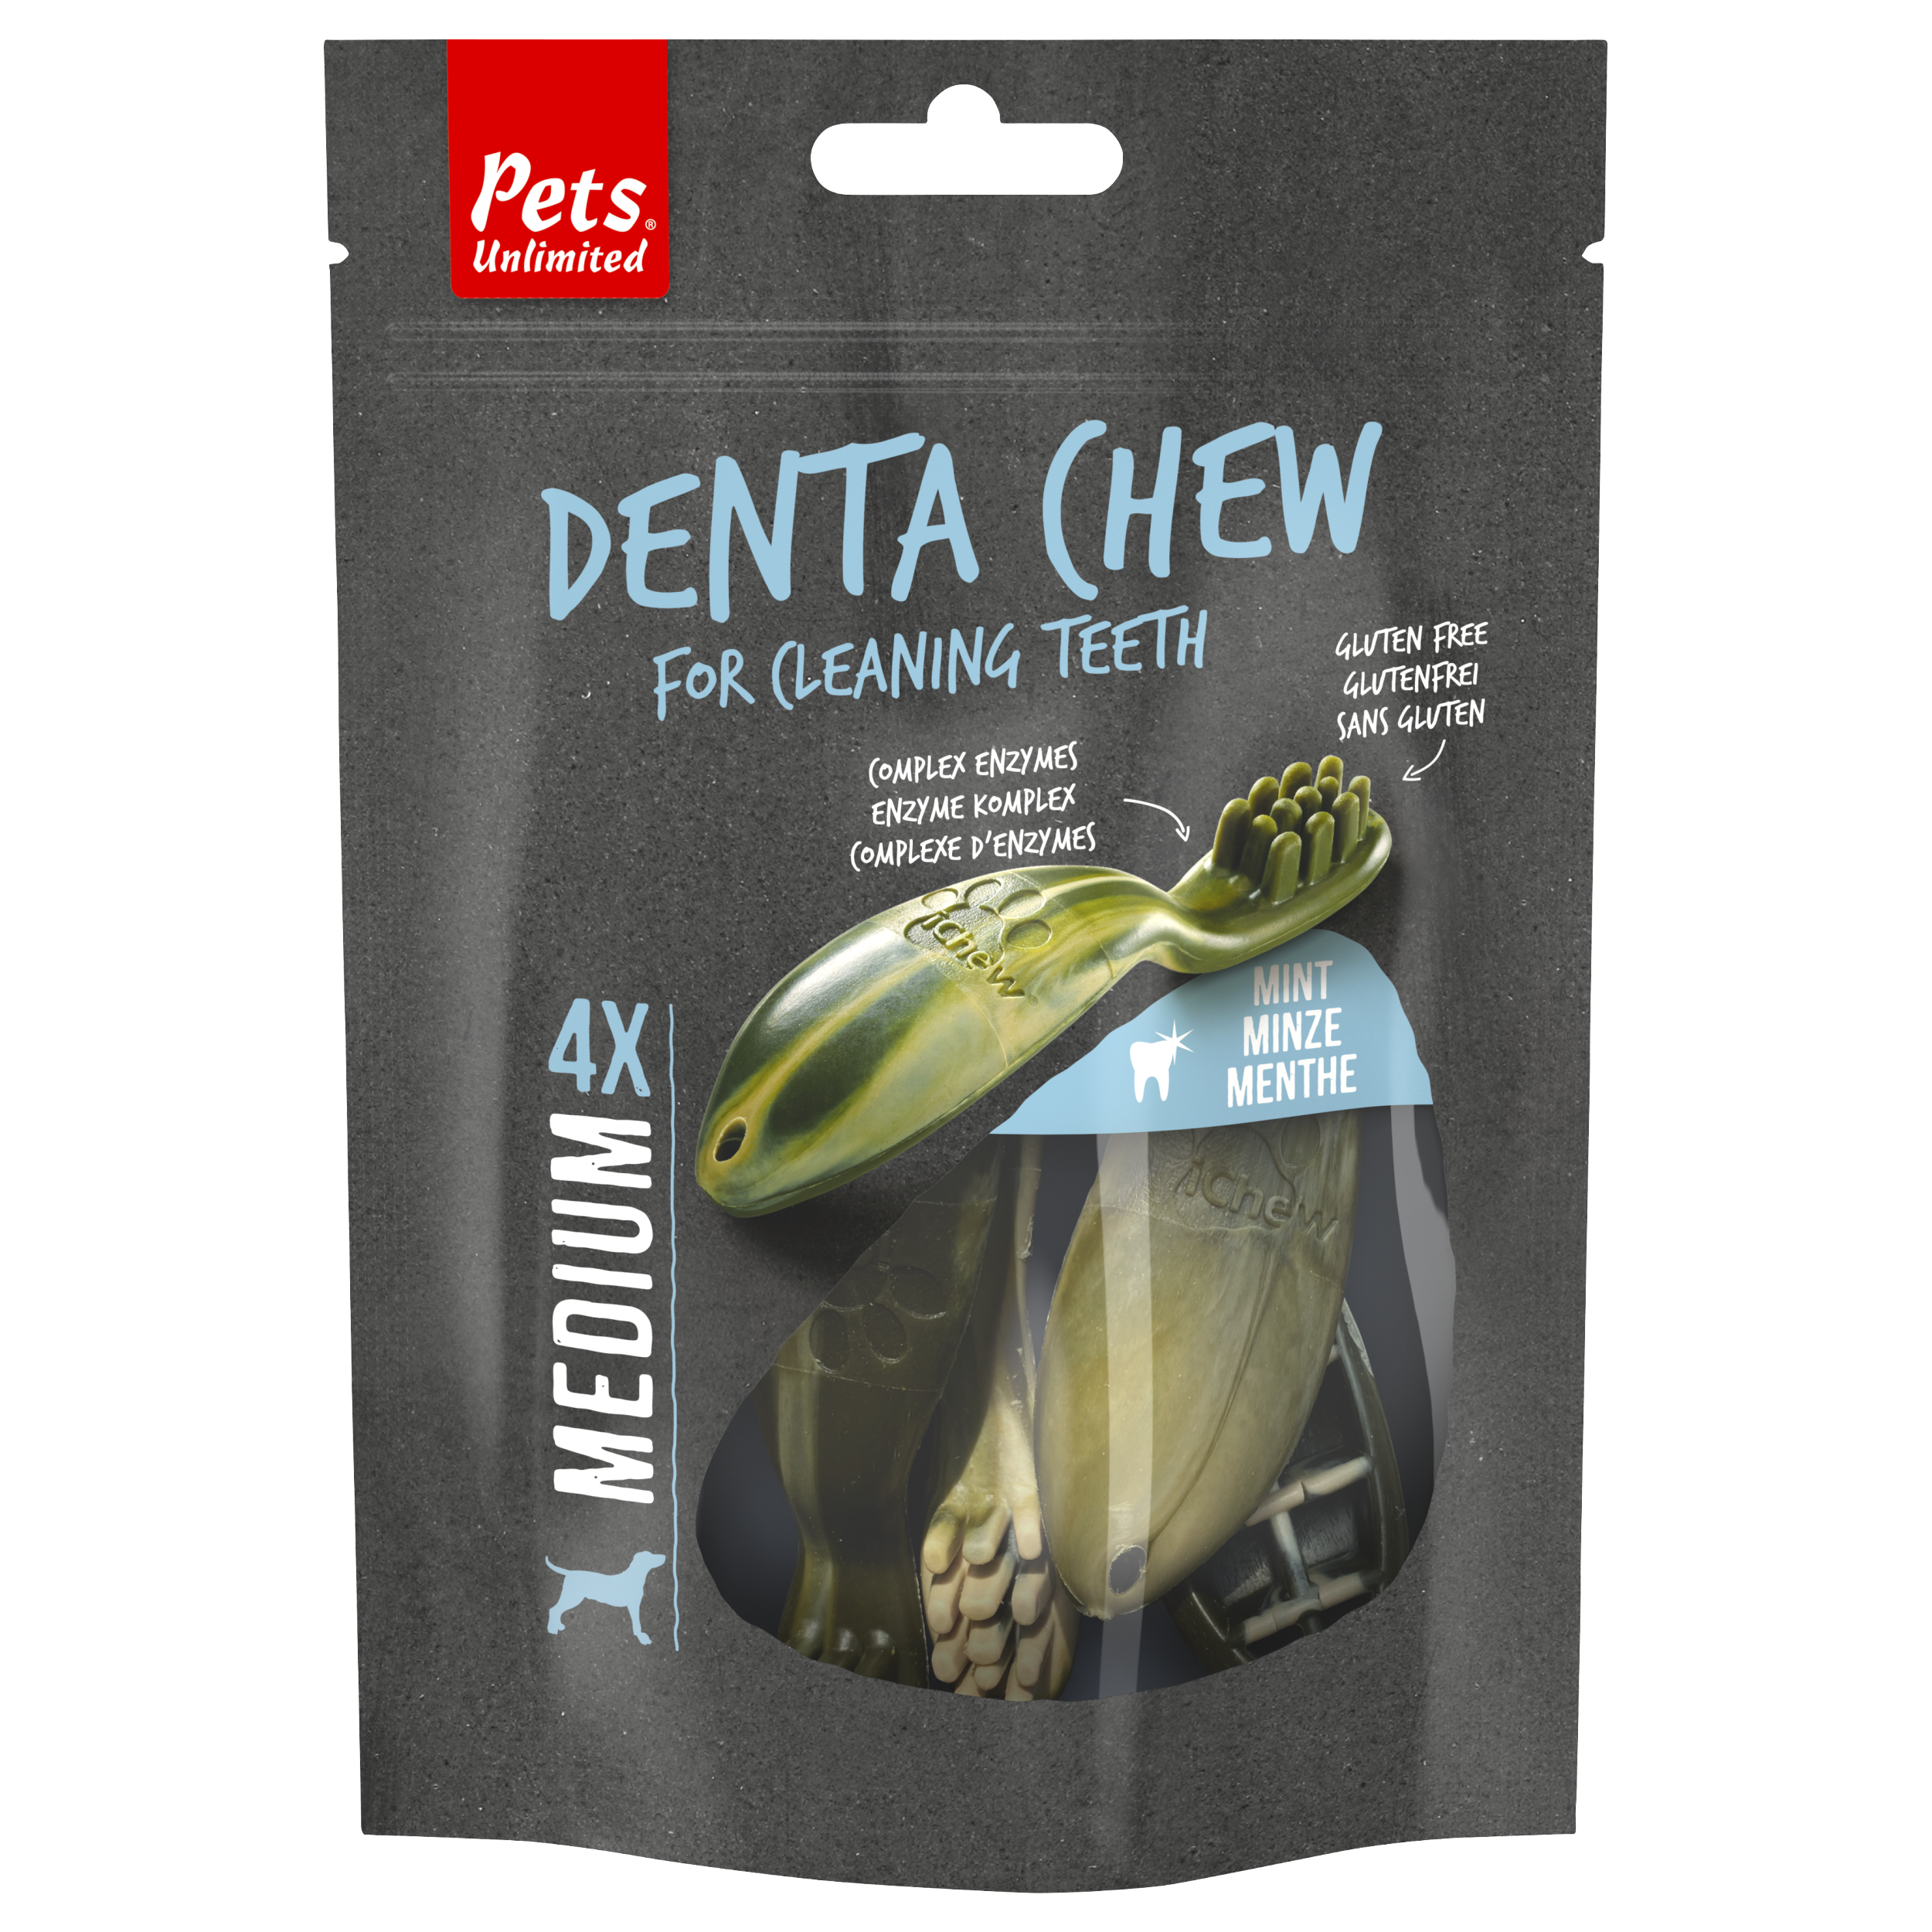 Denta Chew medium, 4 pieces